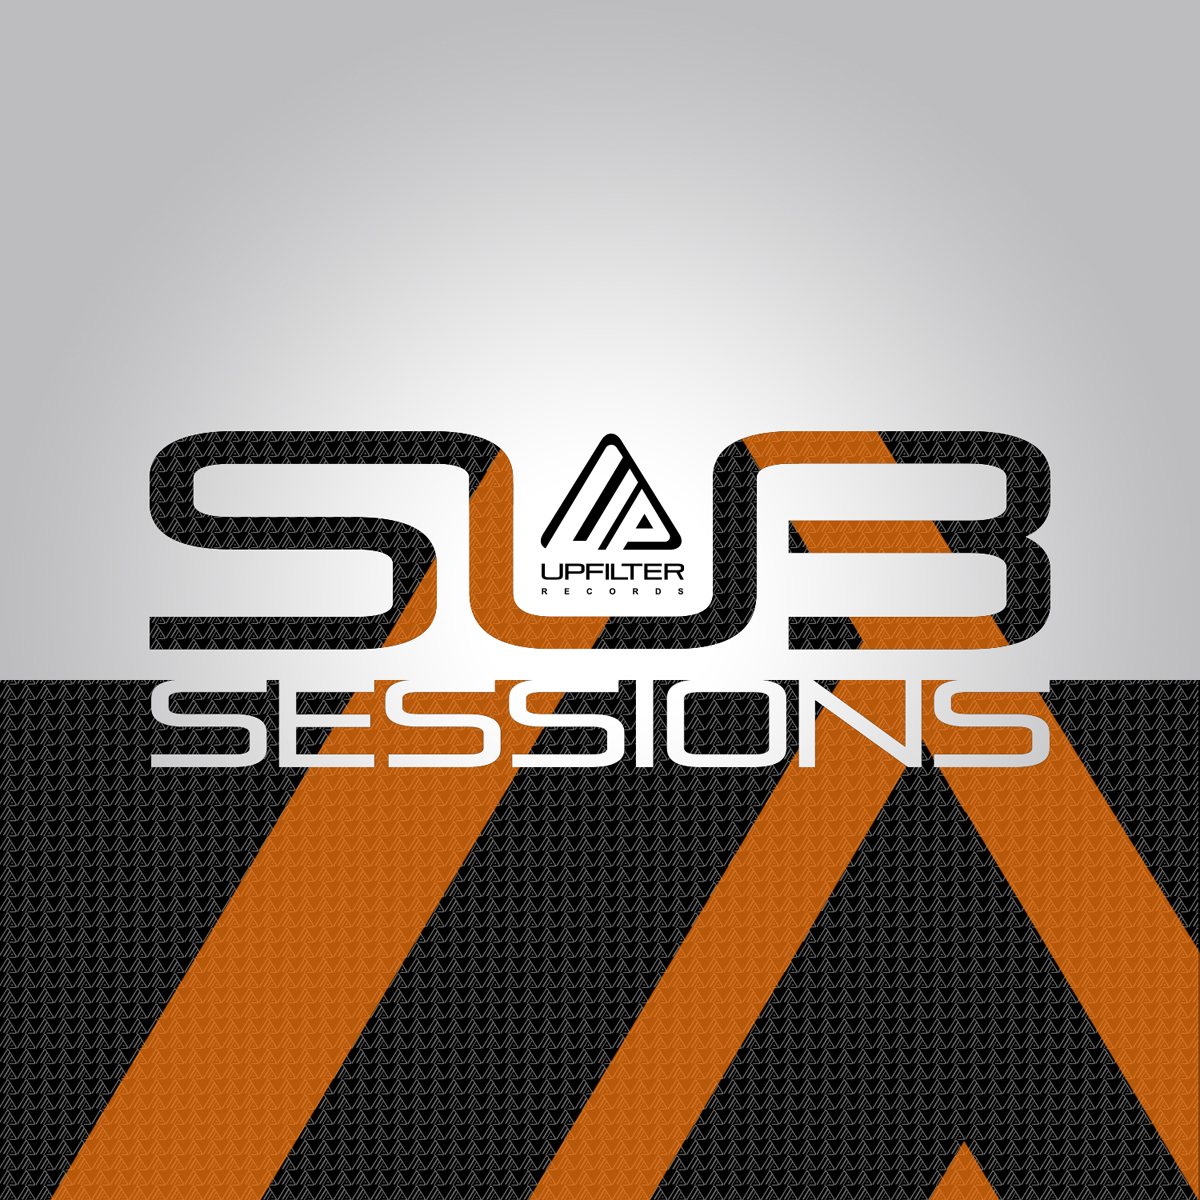  “Sub Sessions”